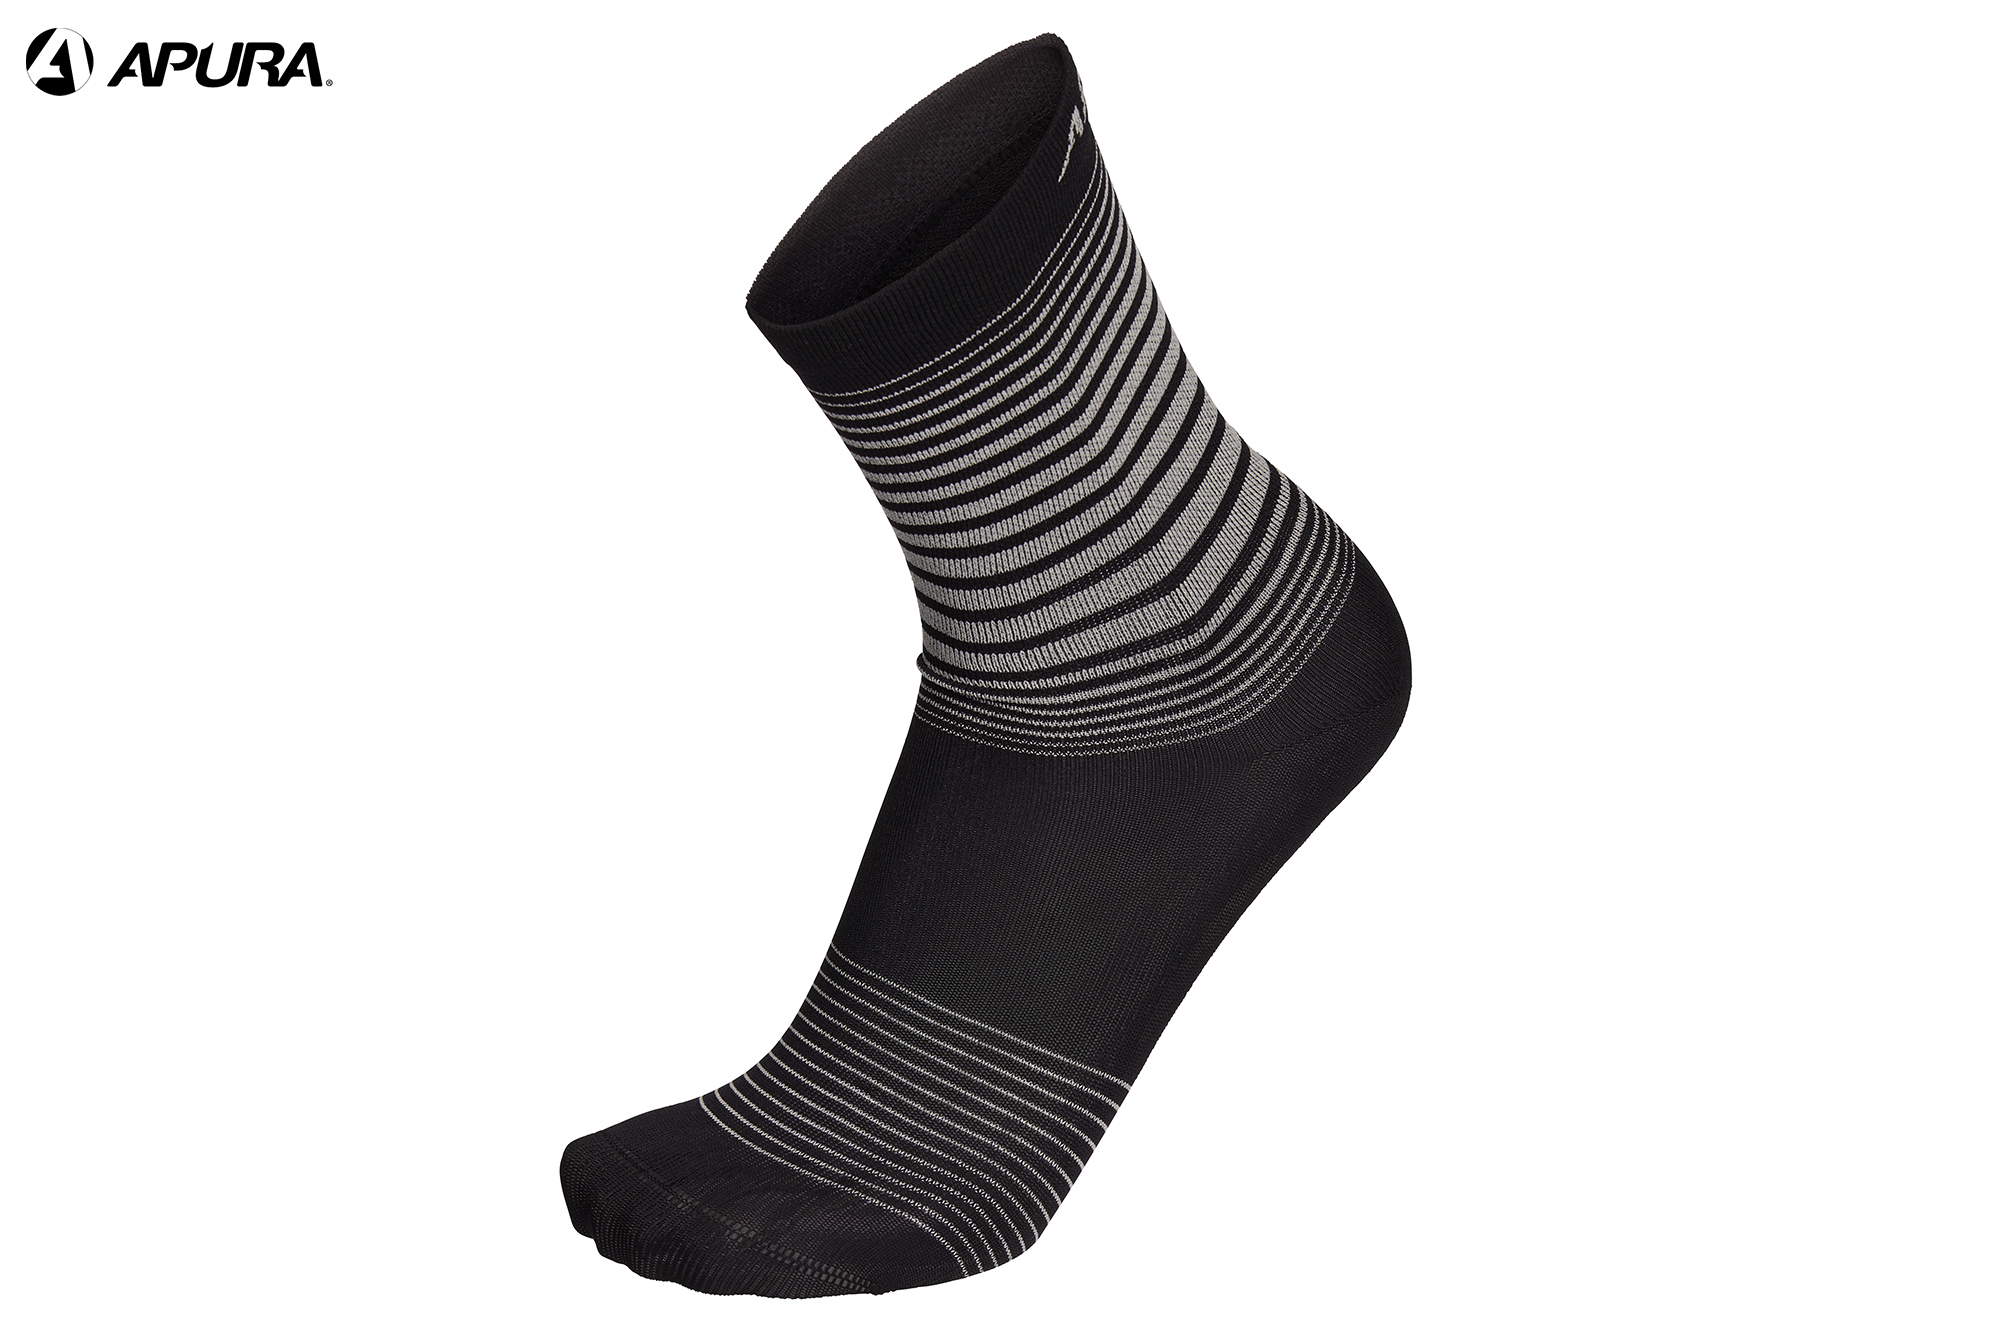 APURA Socke "Stripe" - schwarz / grau